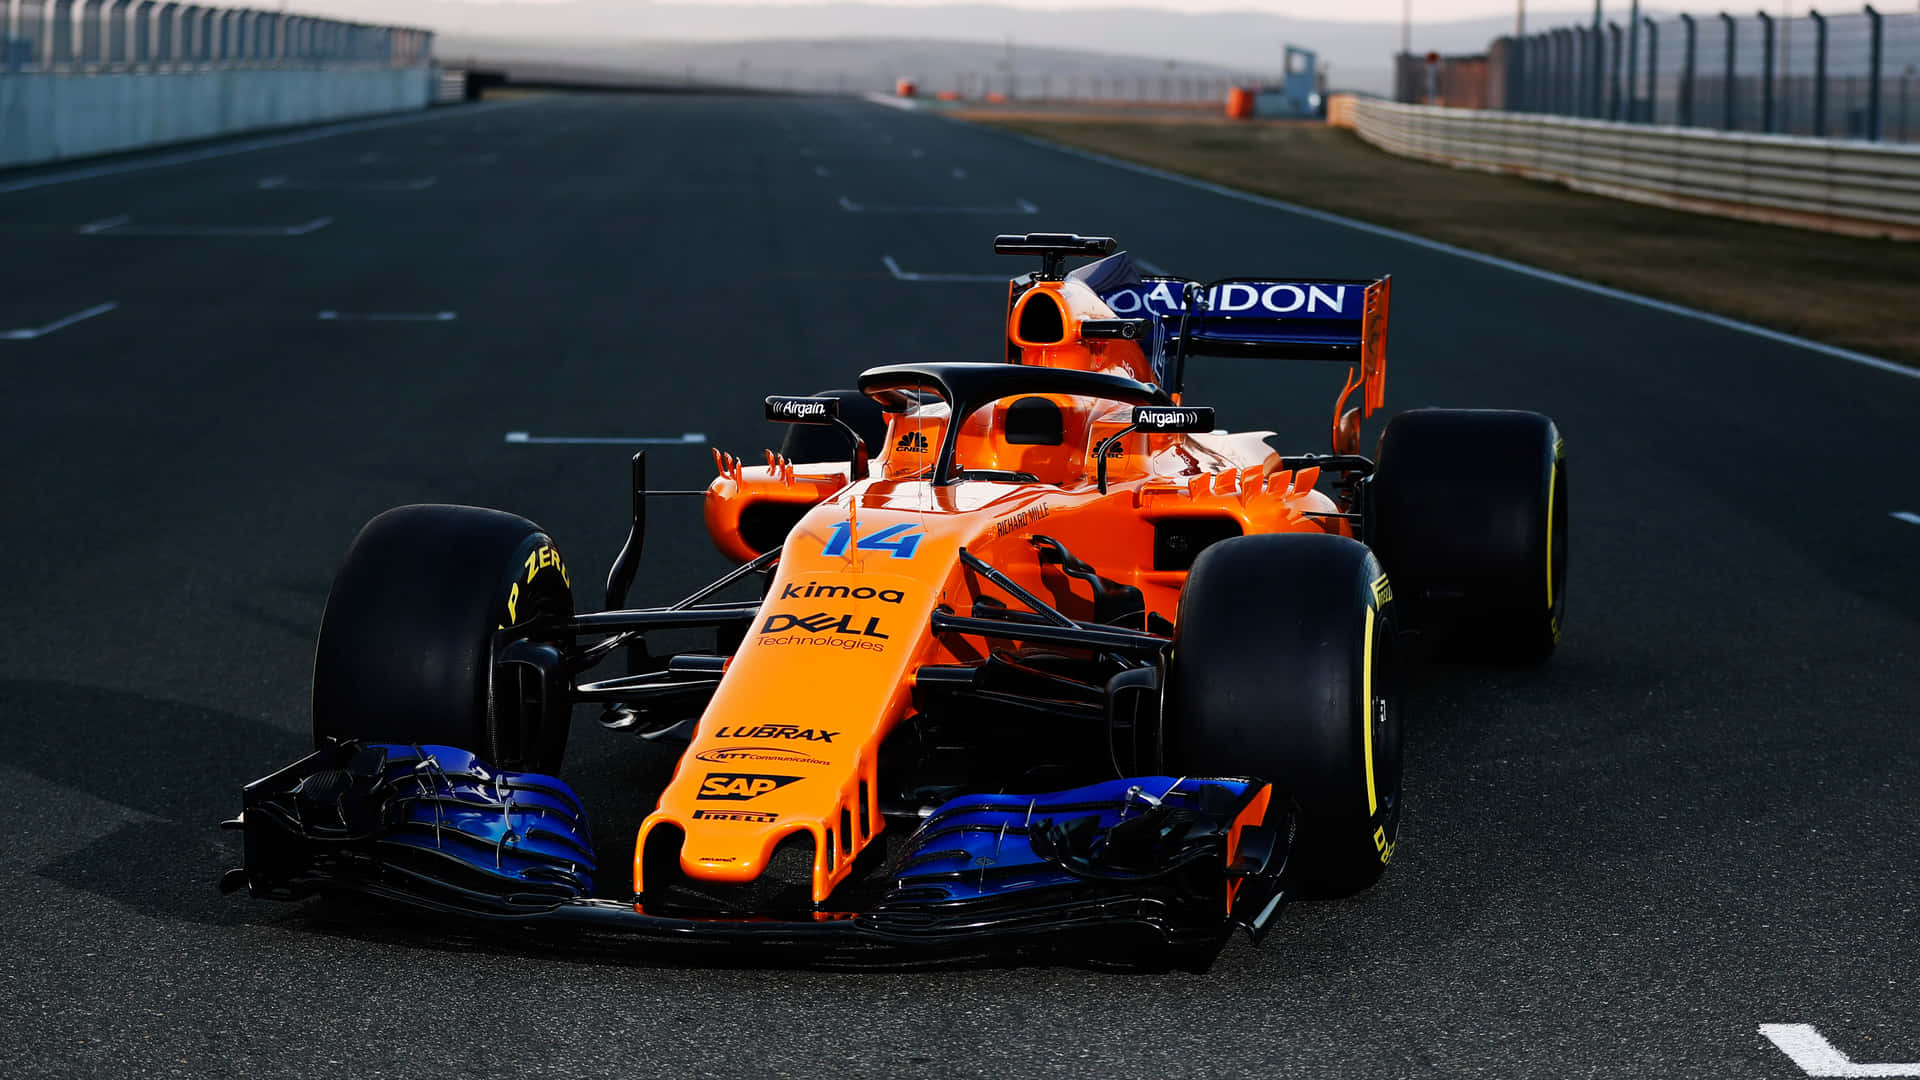 Stunning McLaren F1 in motion Wallpaper